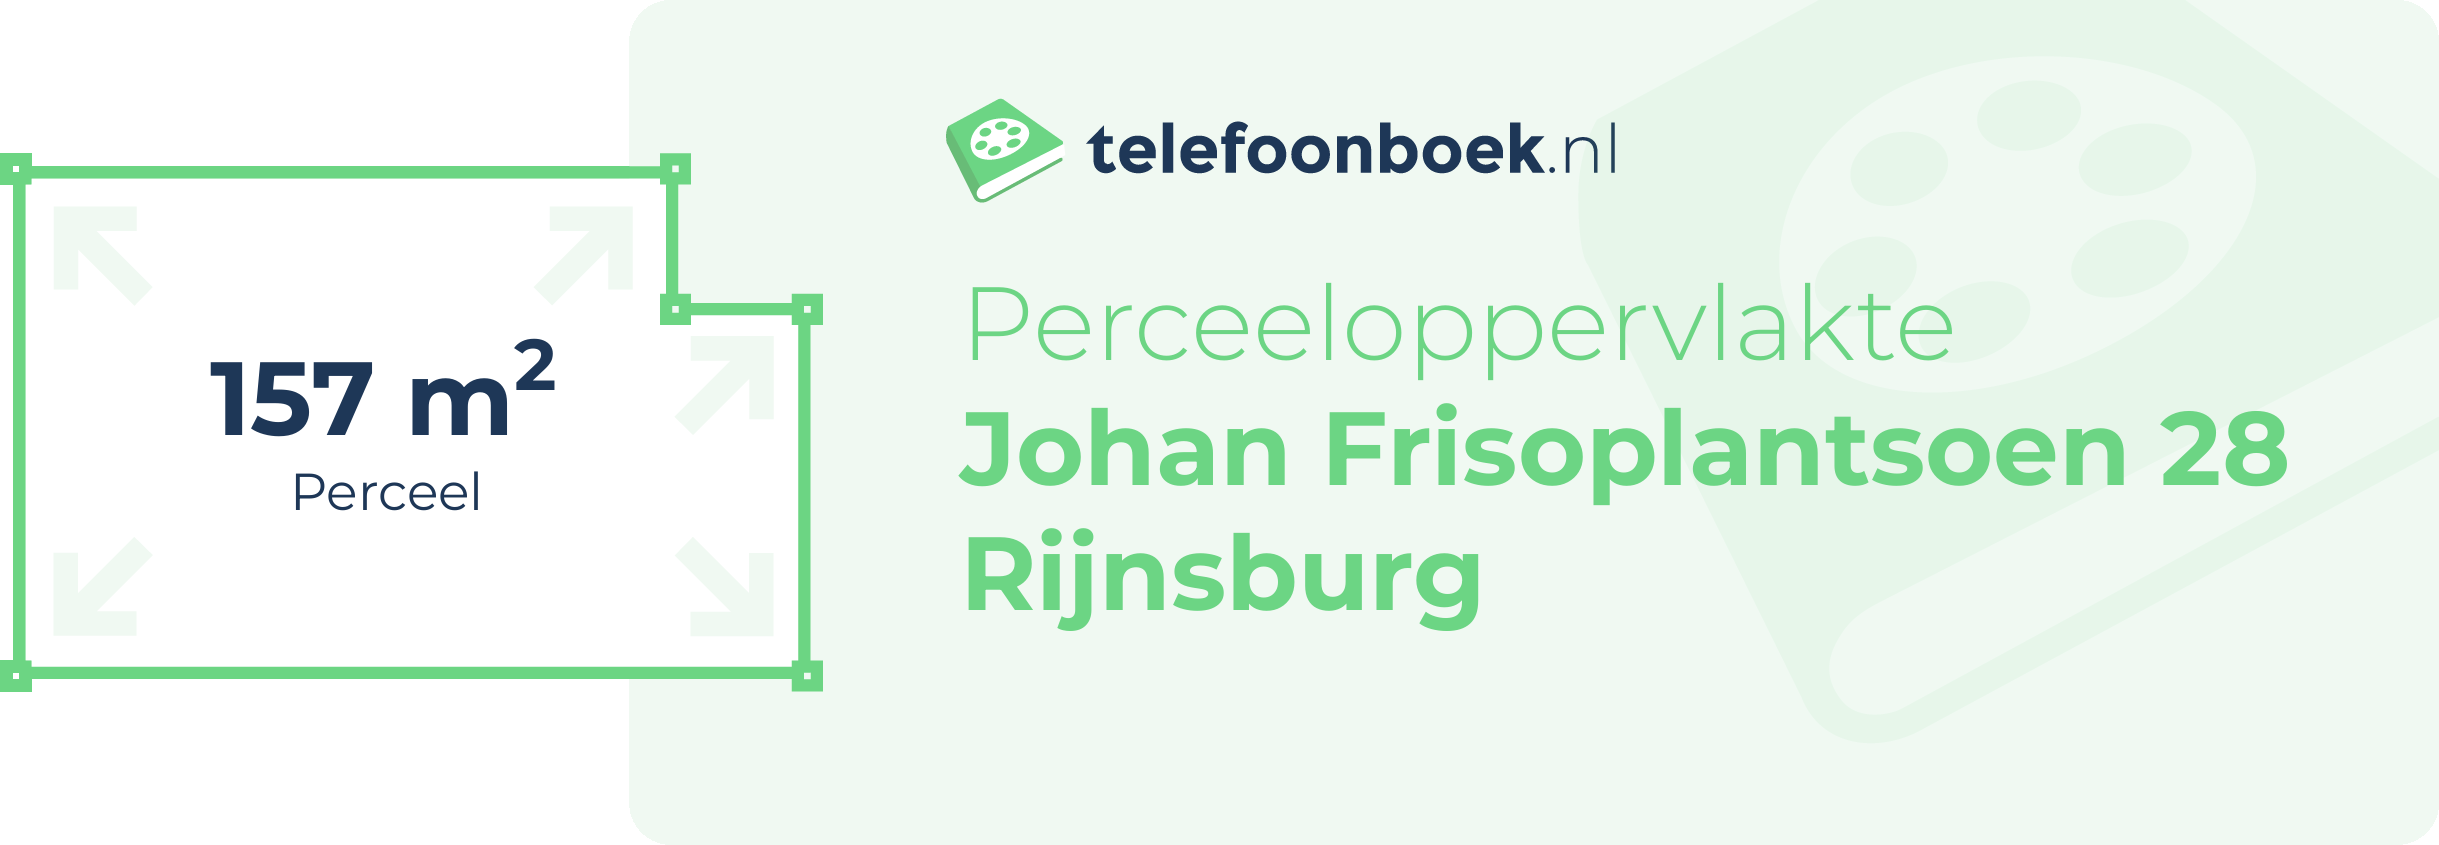 Perceeloppervlakte Johan Frisoplantsoen 28 Rijnsburg